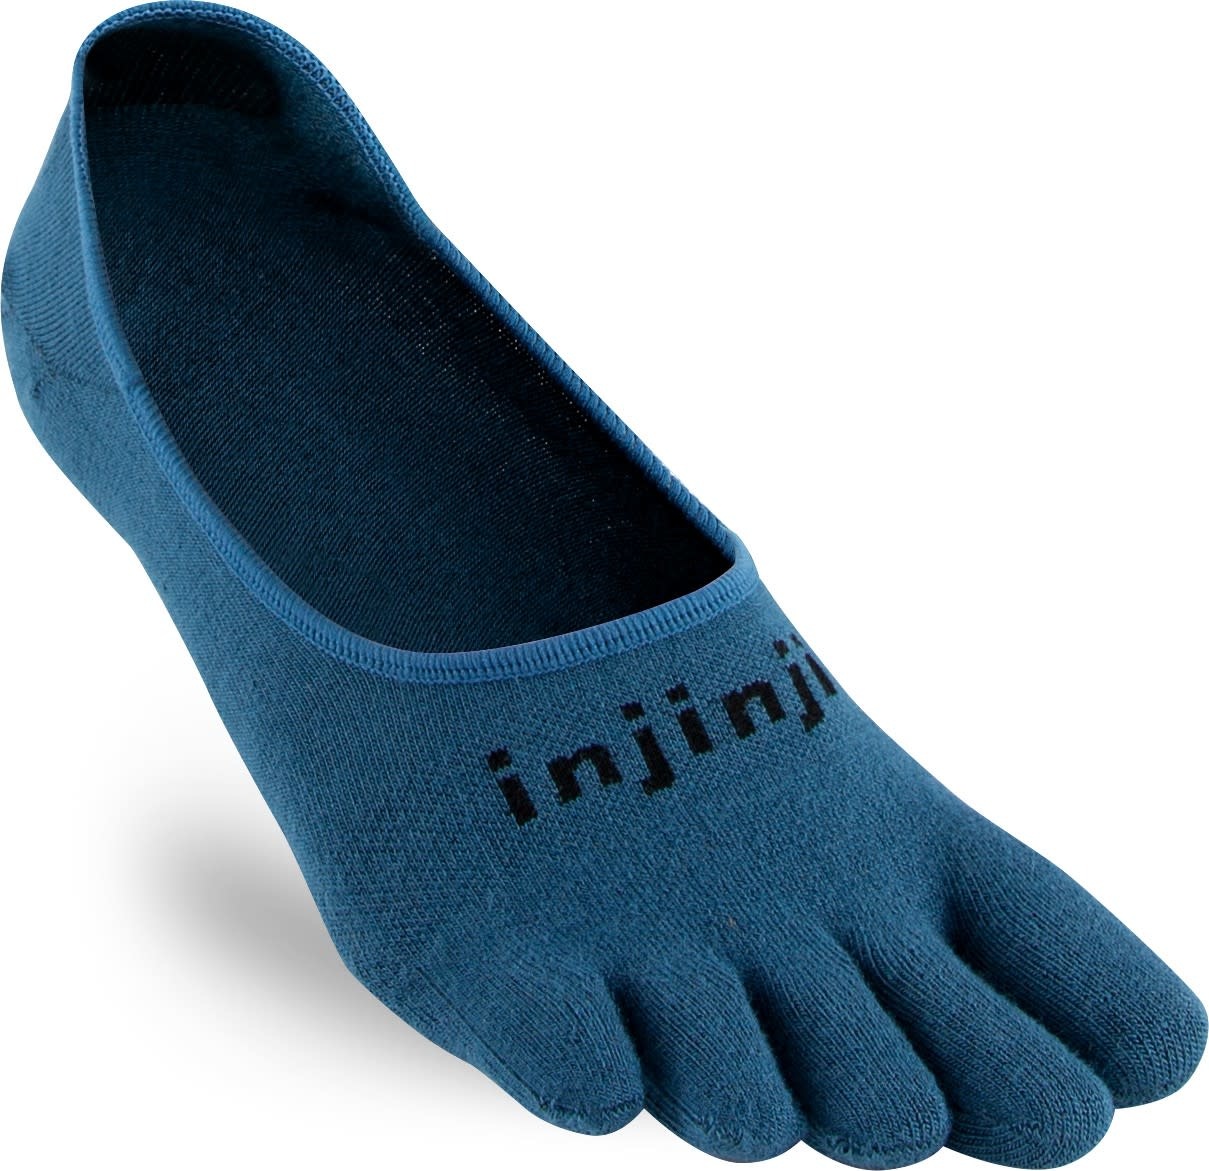 injinji lightweight toe socks